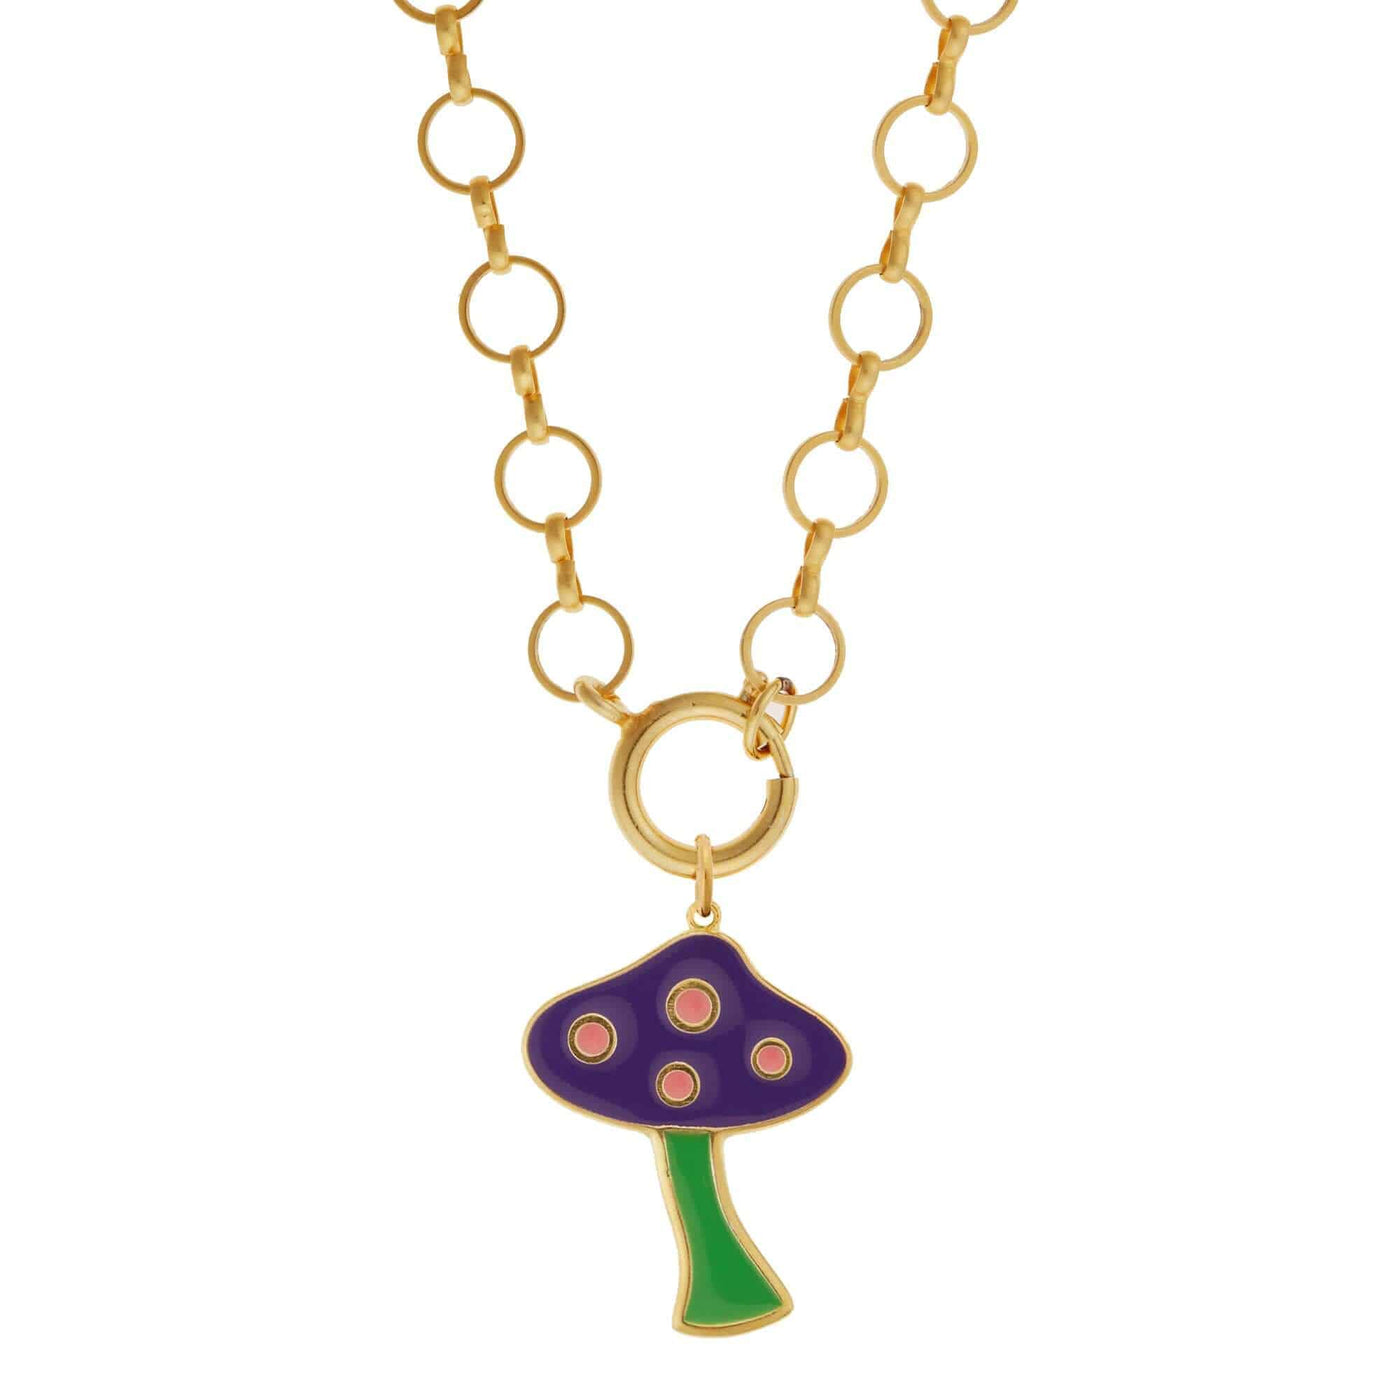 Big Purple Mushroom Necklace - Eye M Flower Power - Ileana Makri store